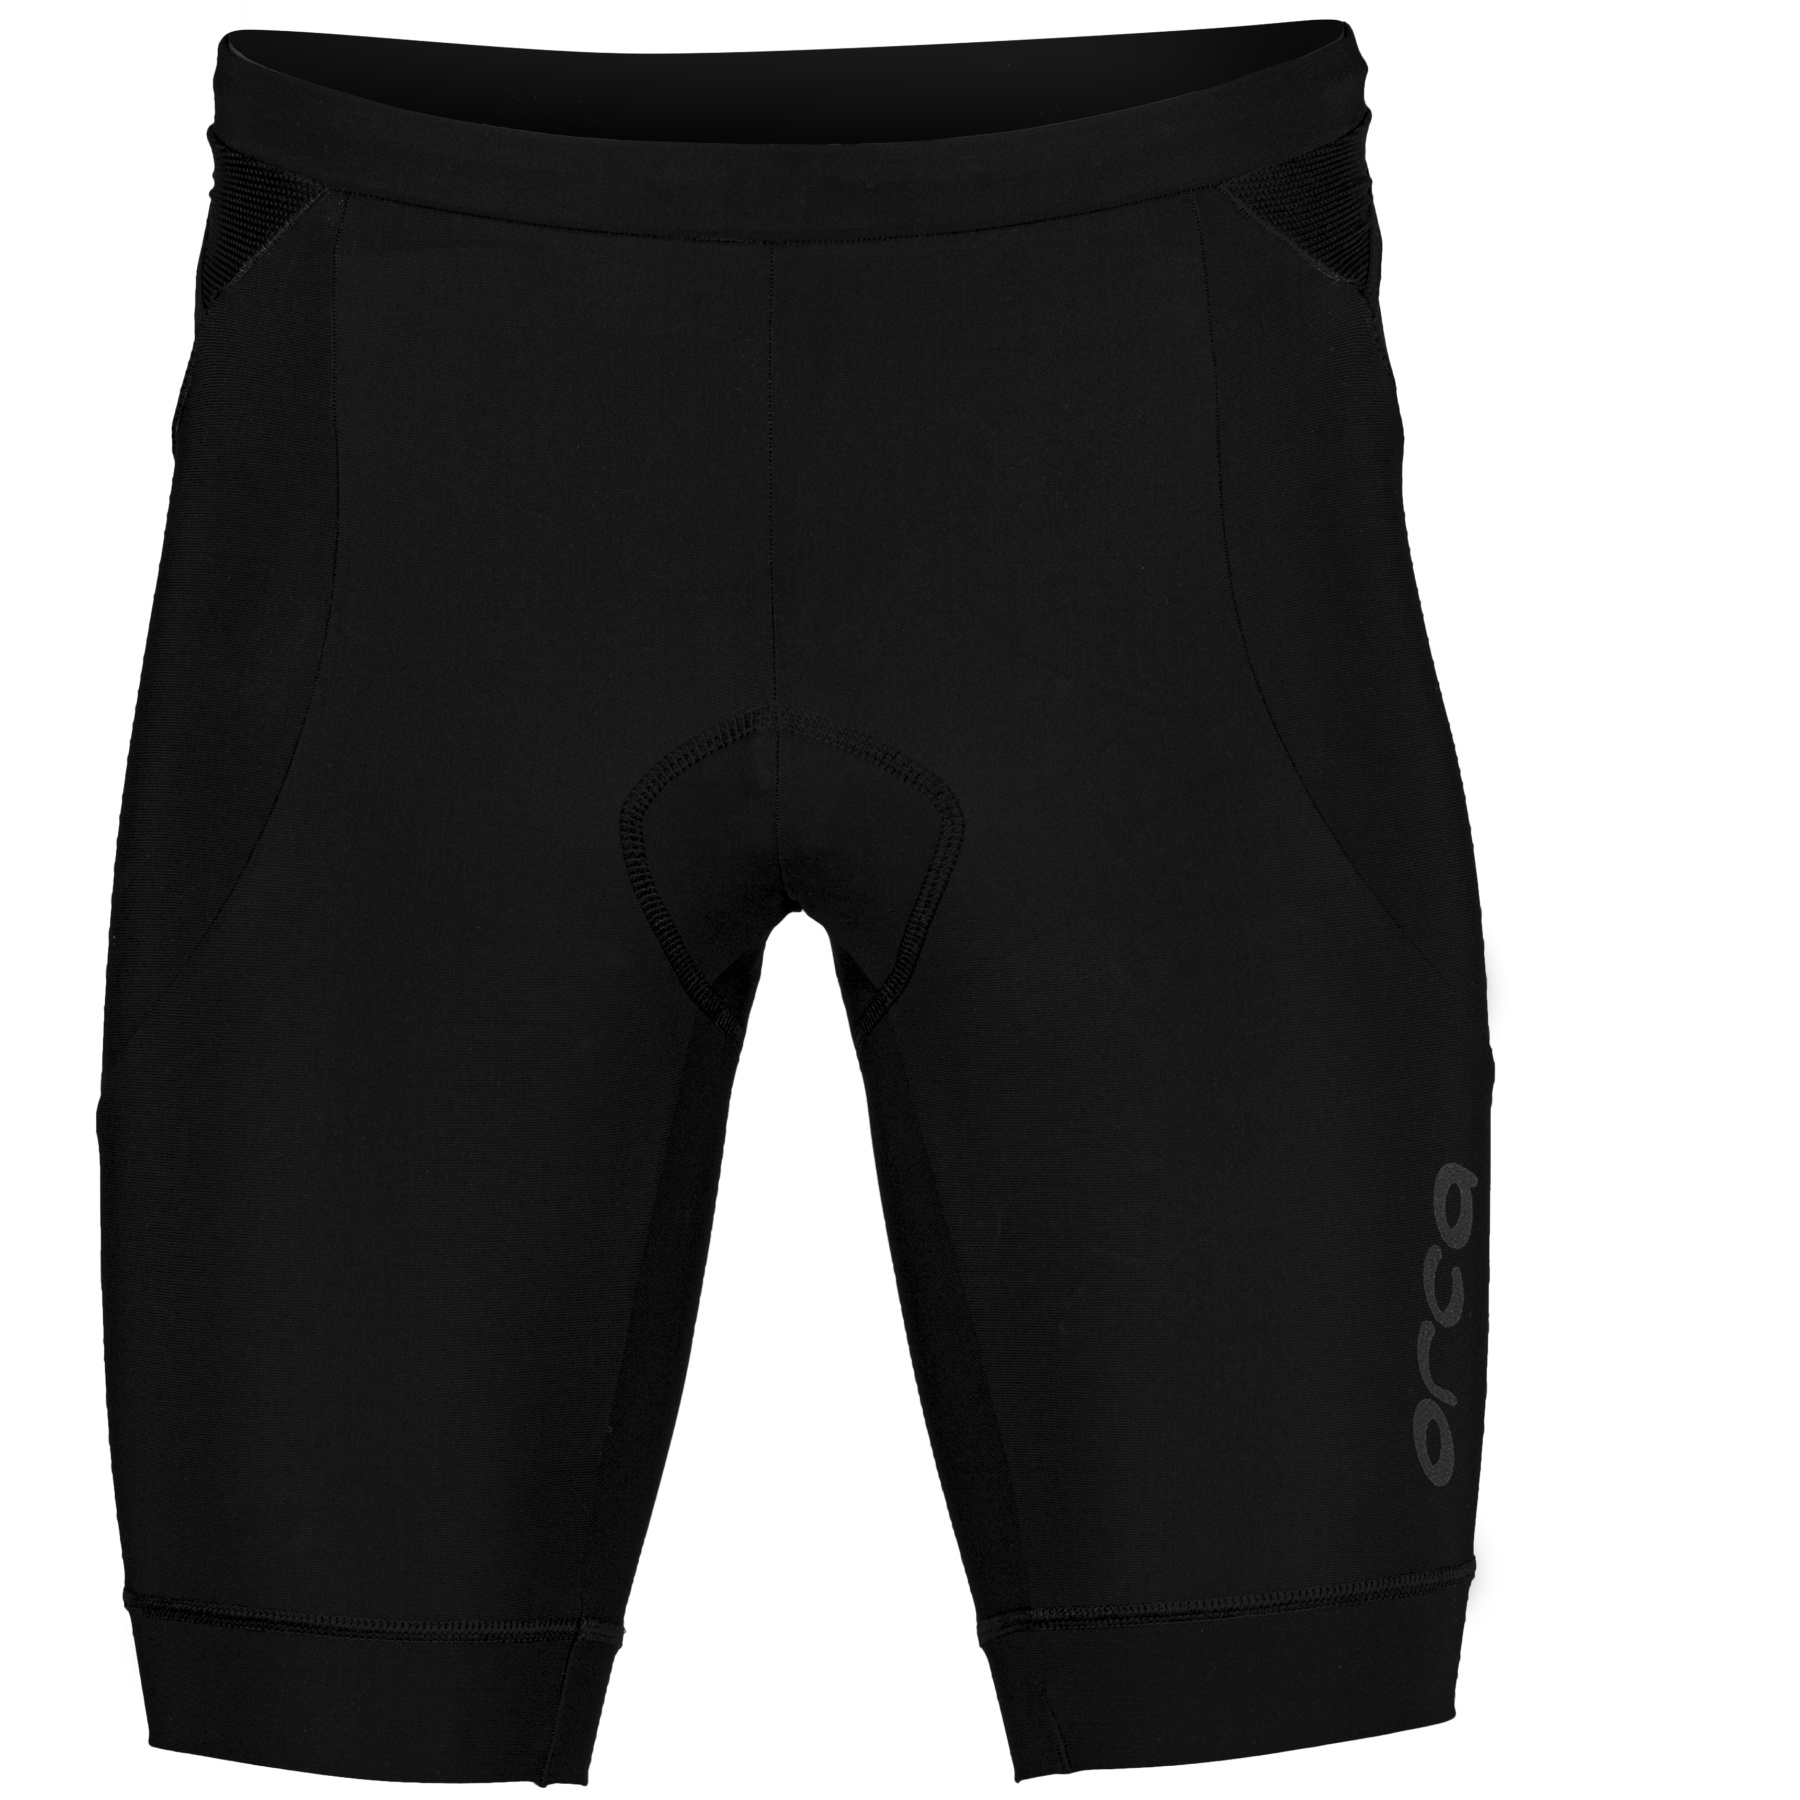 Picture of Orca Athlex Tri Shorts - black